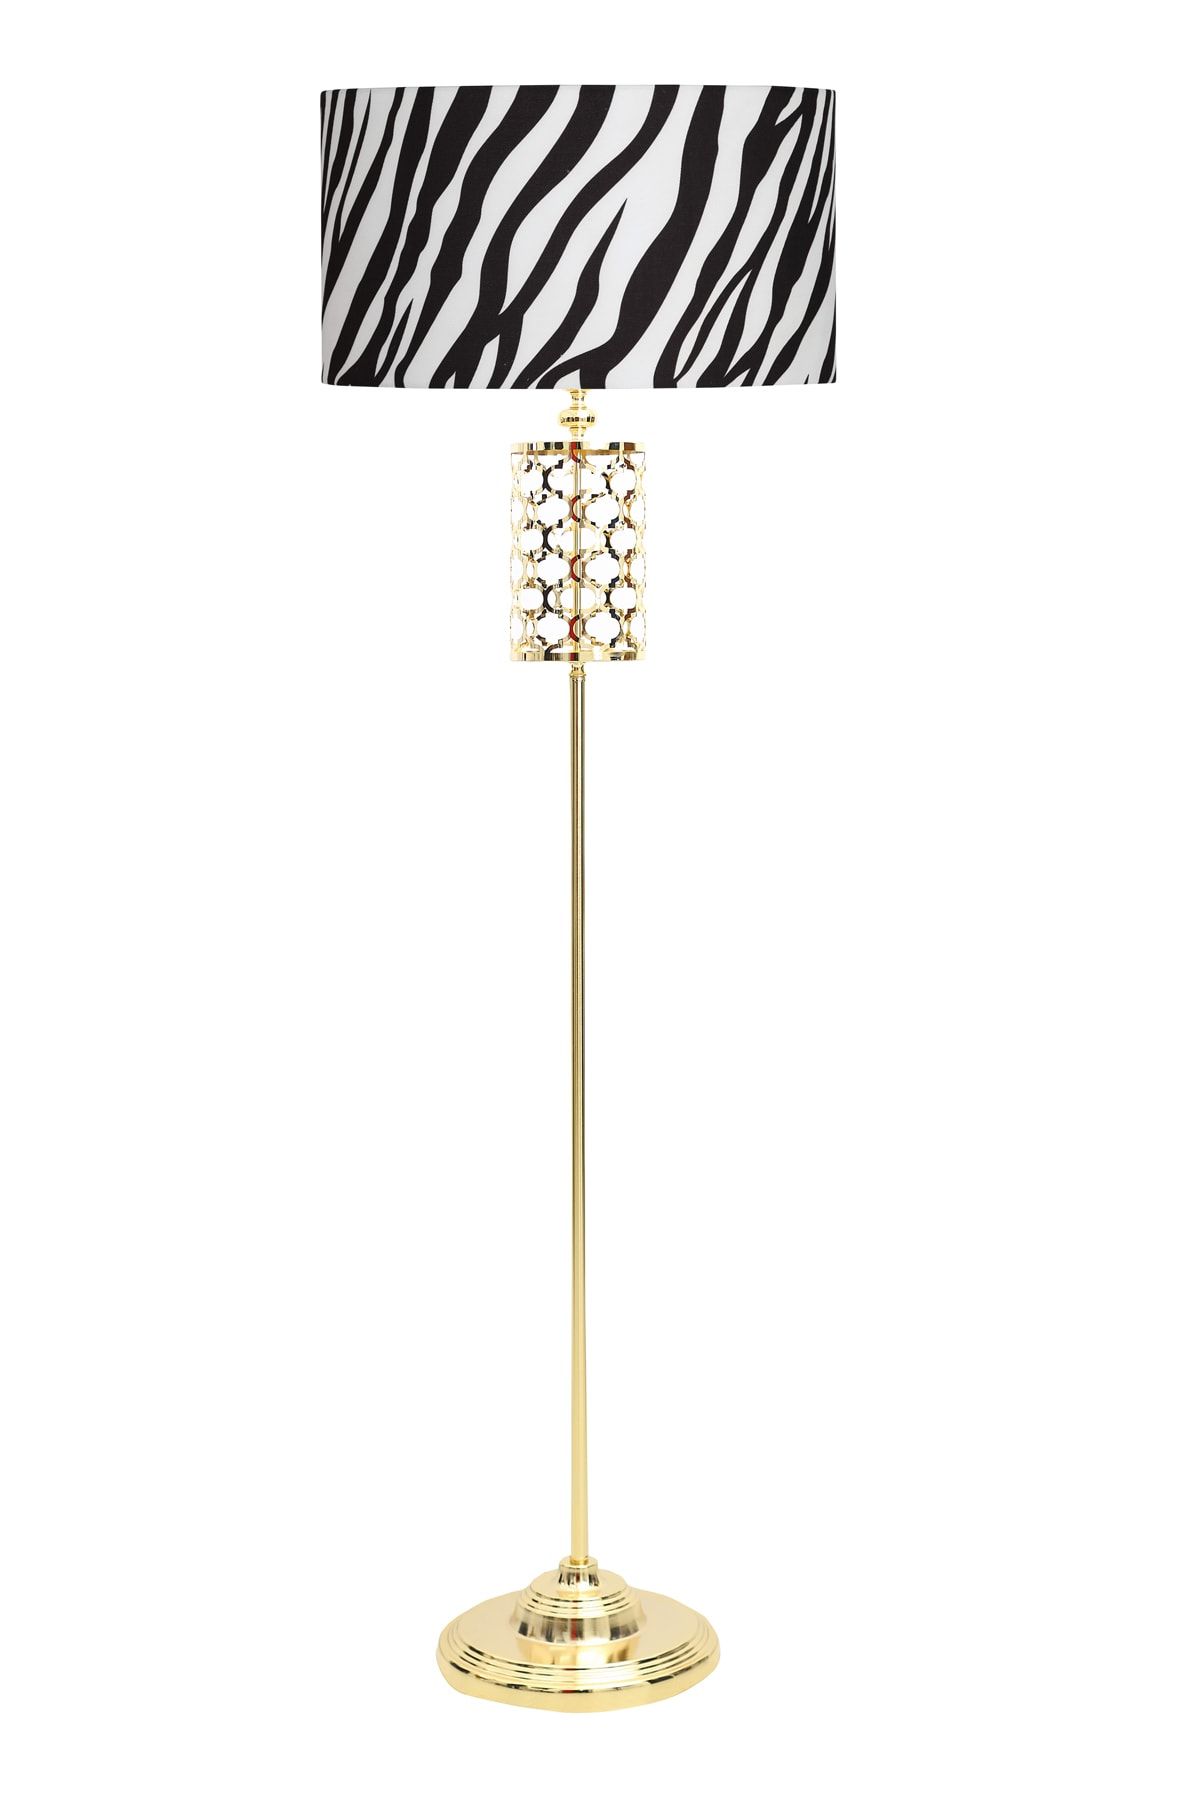 Vinner Bourges Gold Kaplama Özel Tasarım Metal Lambader - Zebra Desenli